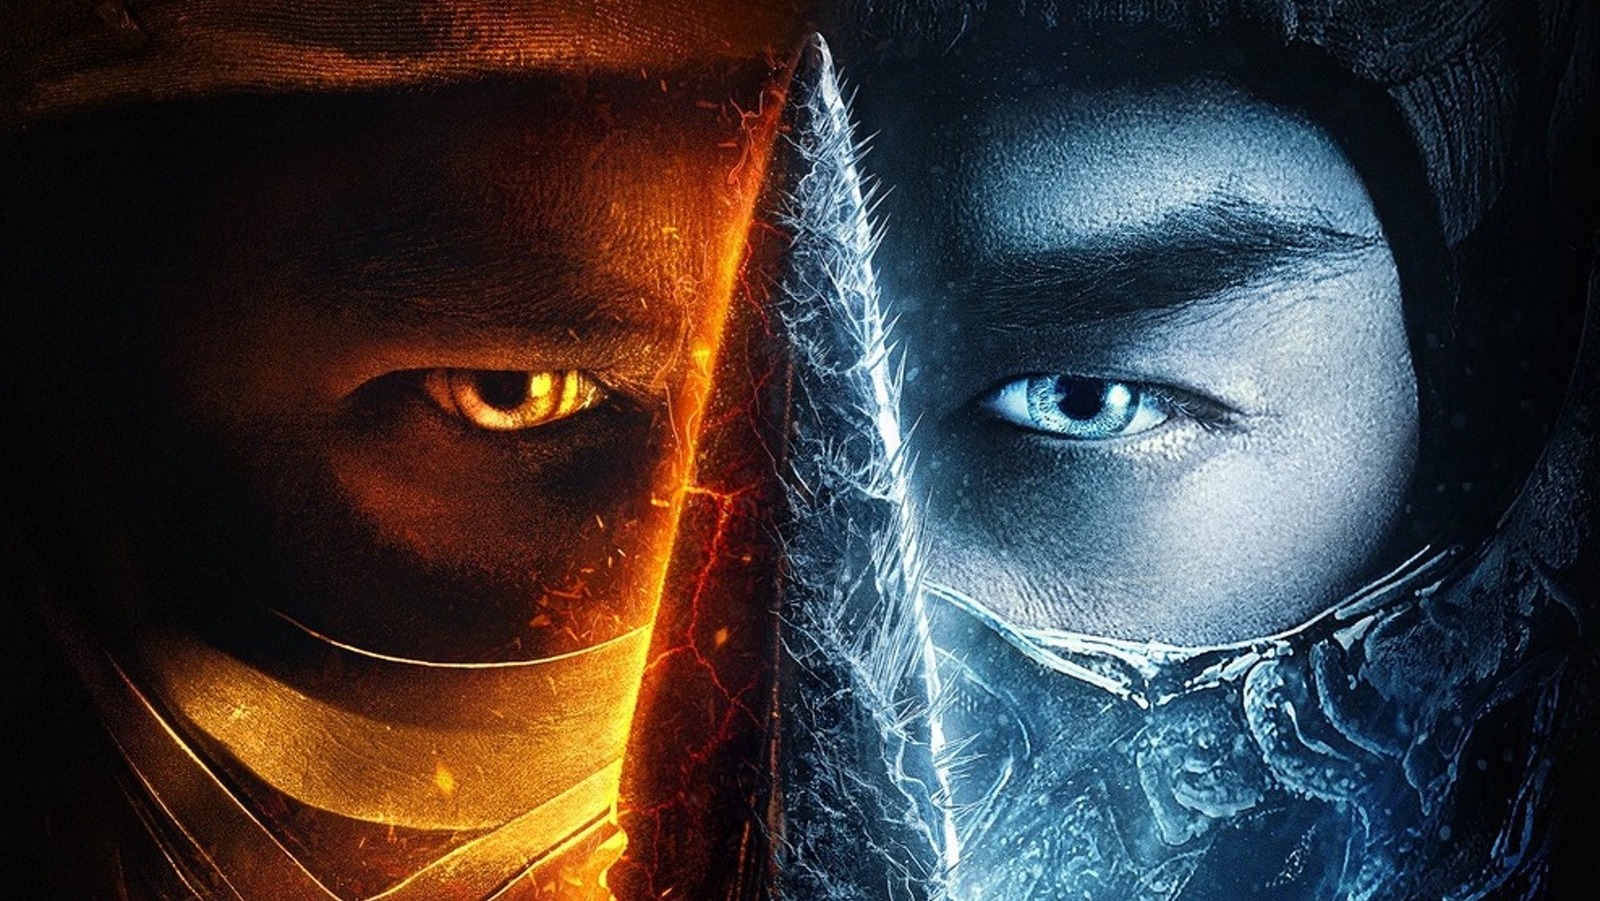 Mortal Kombat: Liu Kang story trailer highlights hero's backstory